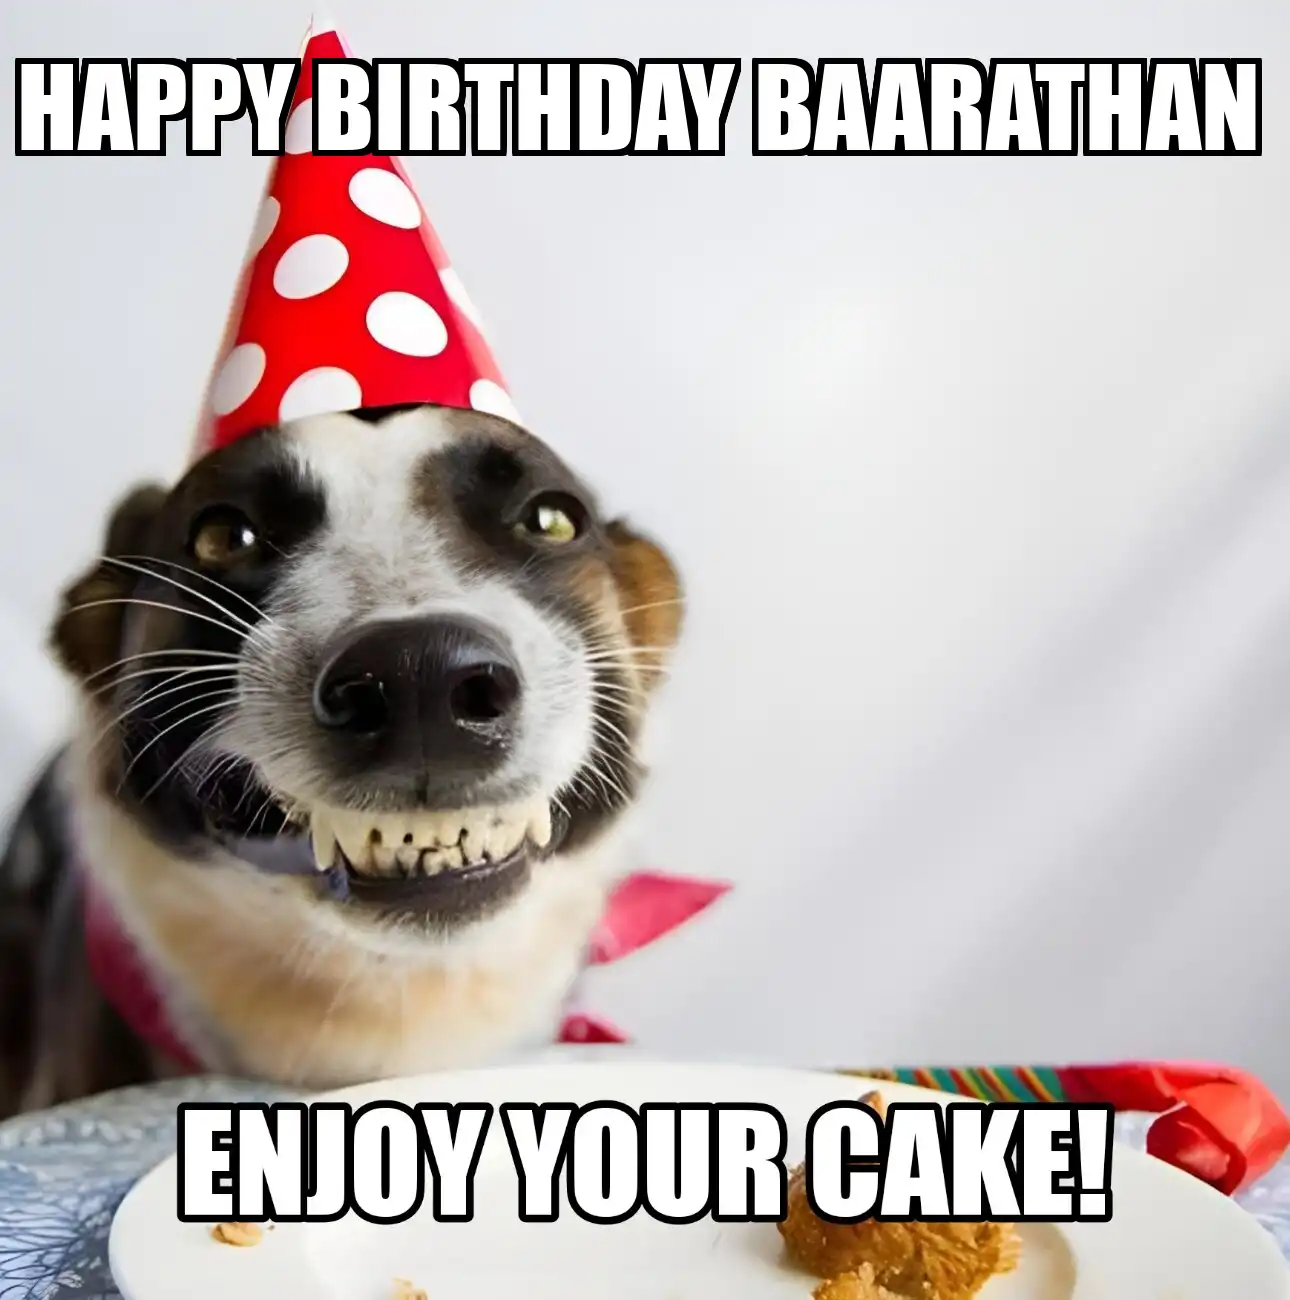 Happy Birthday Baarathan Enjoy Your Cake Dog Meme